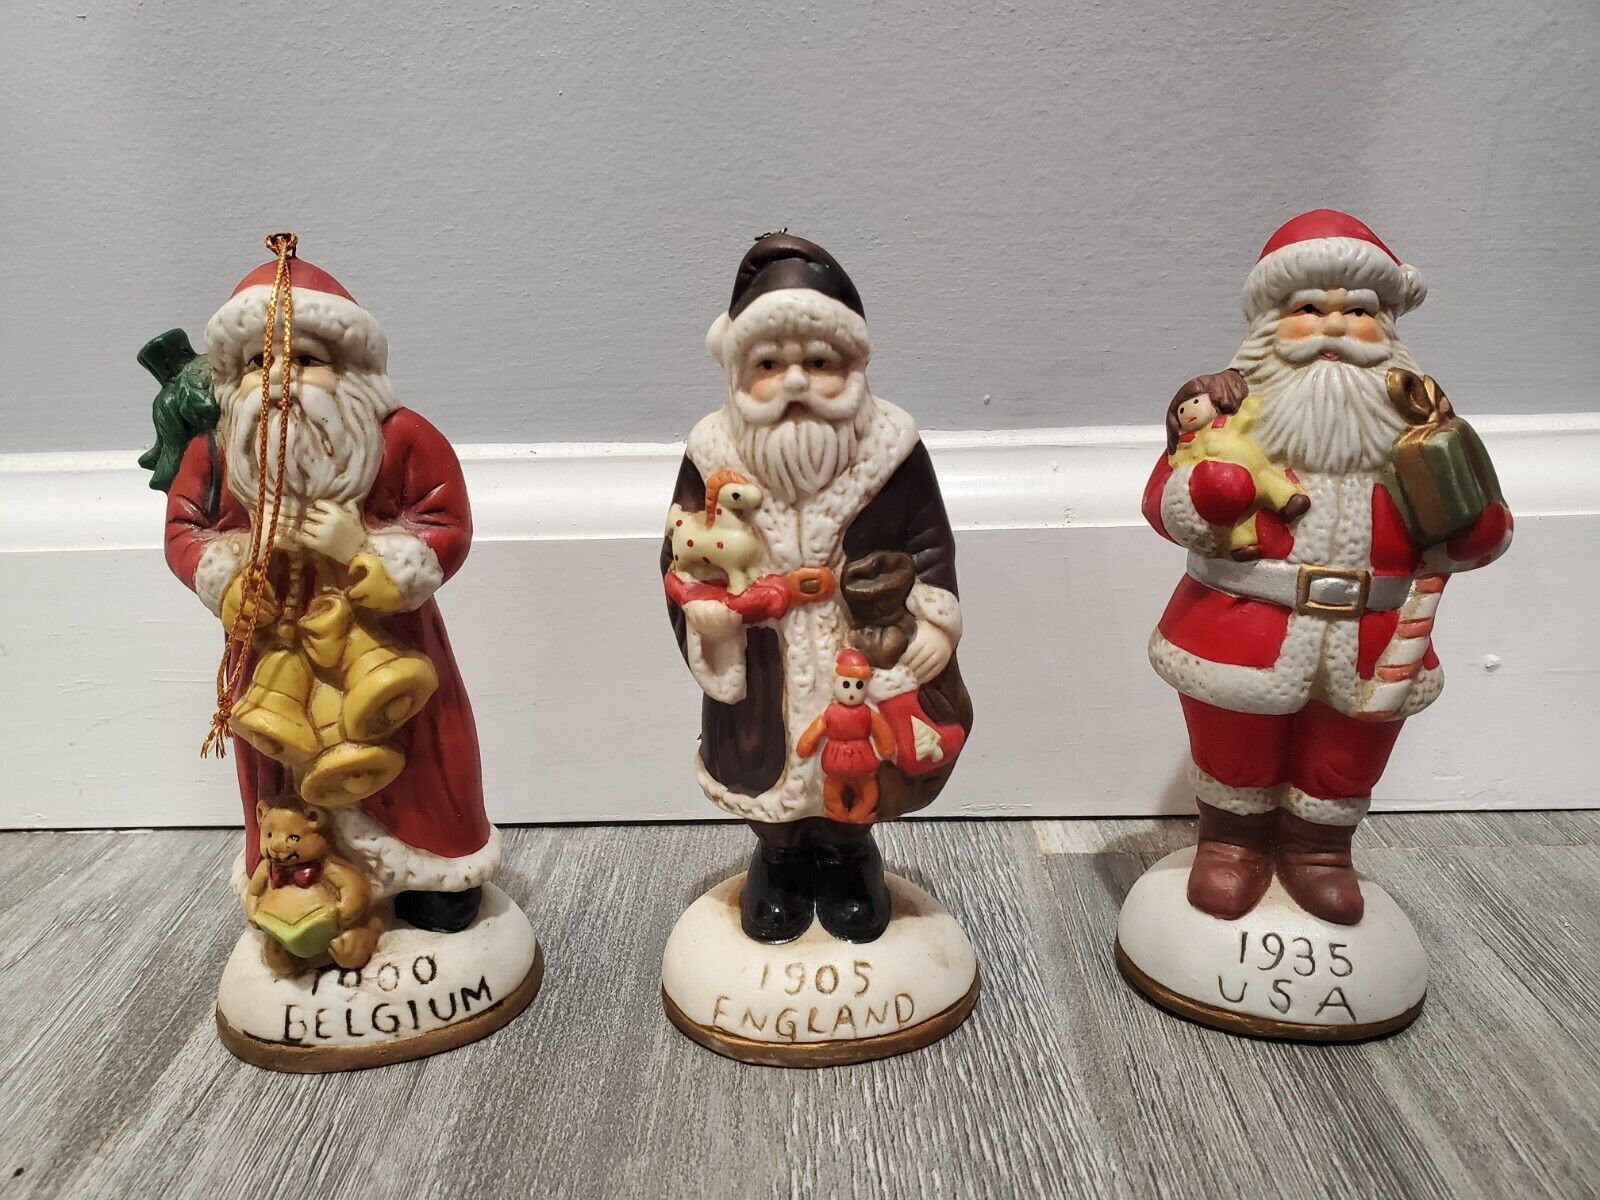 Lot of 3 Old World Santa Figurines Porcelain Vintage Belgium, USA, ENGLAND